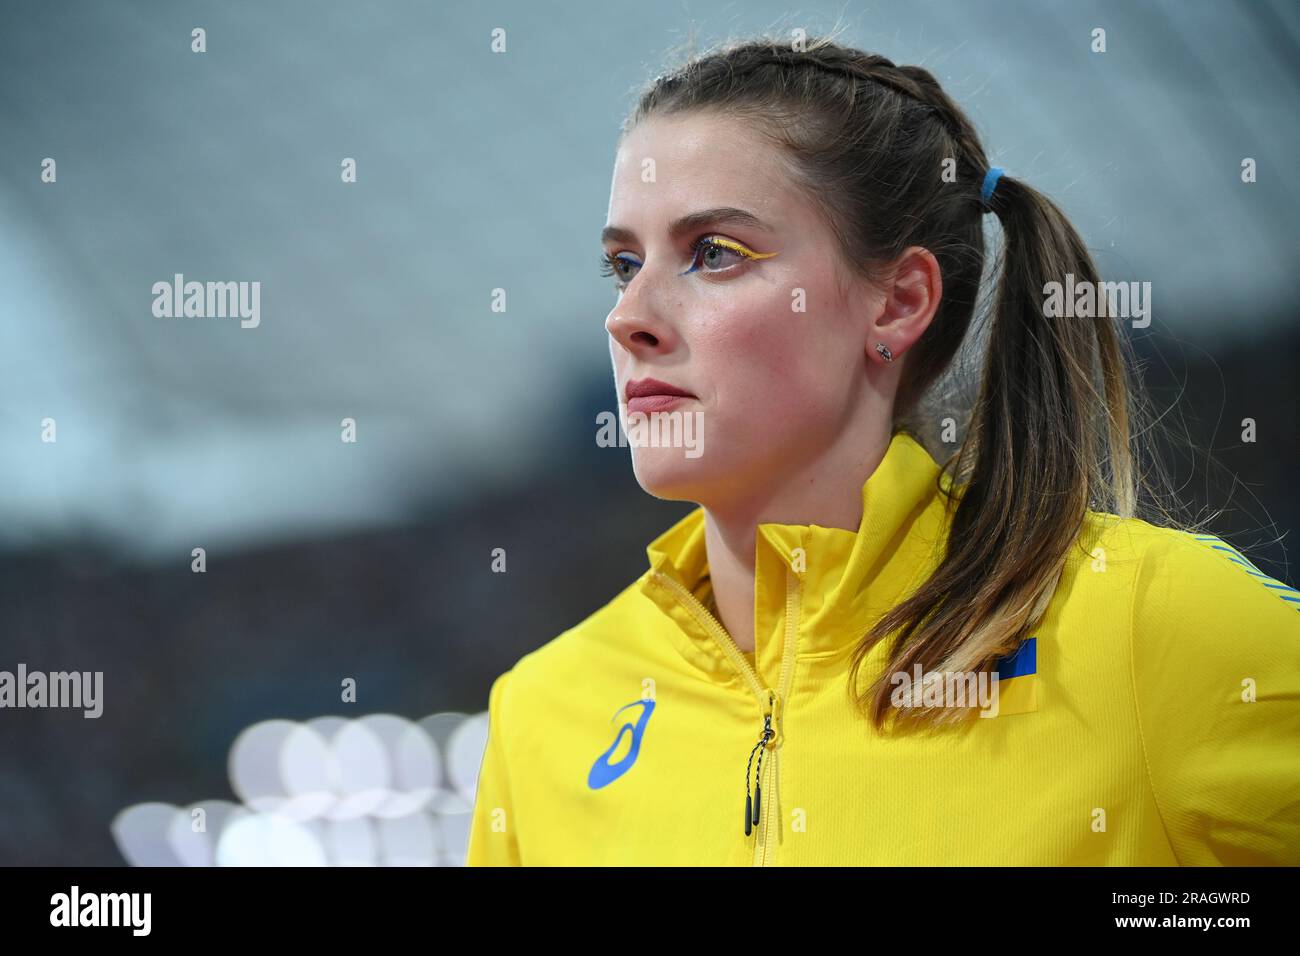 Yaroslava Mahuchikh (Ukraine). High-Jump-Frauen. Europameisterschaft München 2022 Stockfoto